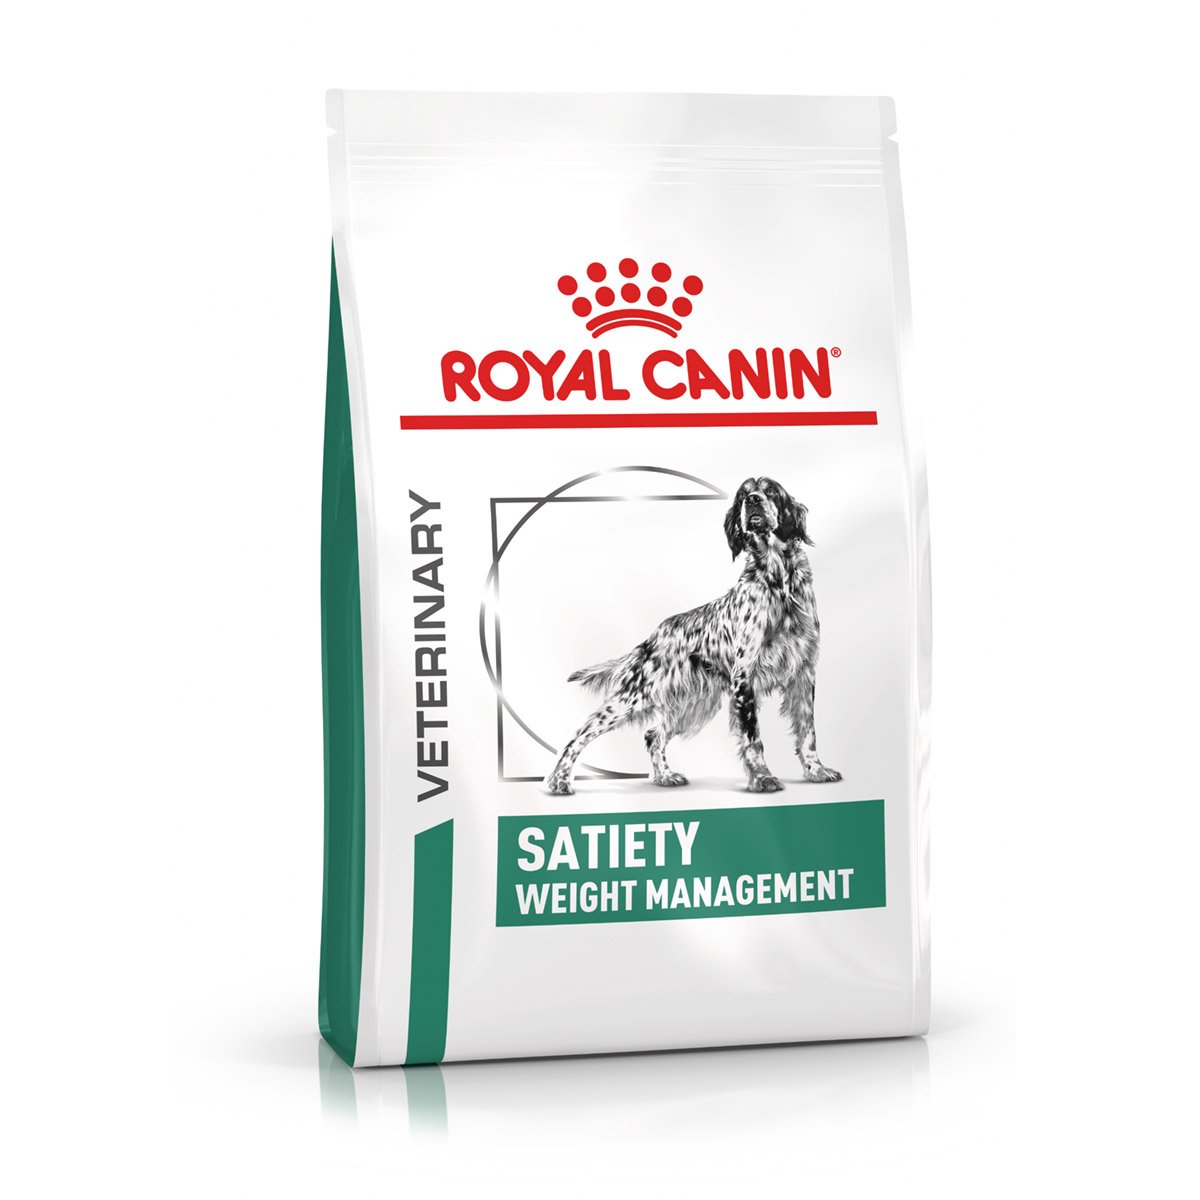 ROYAL CANIN® Veterinary SATIETY WEIGHT MANAGEMENT Trockenfutter für Hunde 1,5kg von Royal Canin